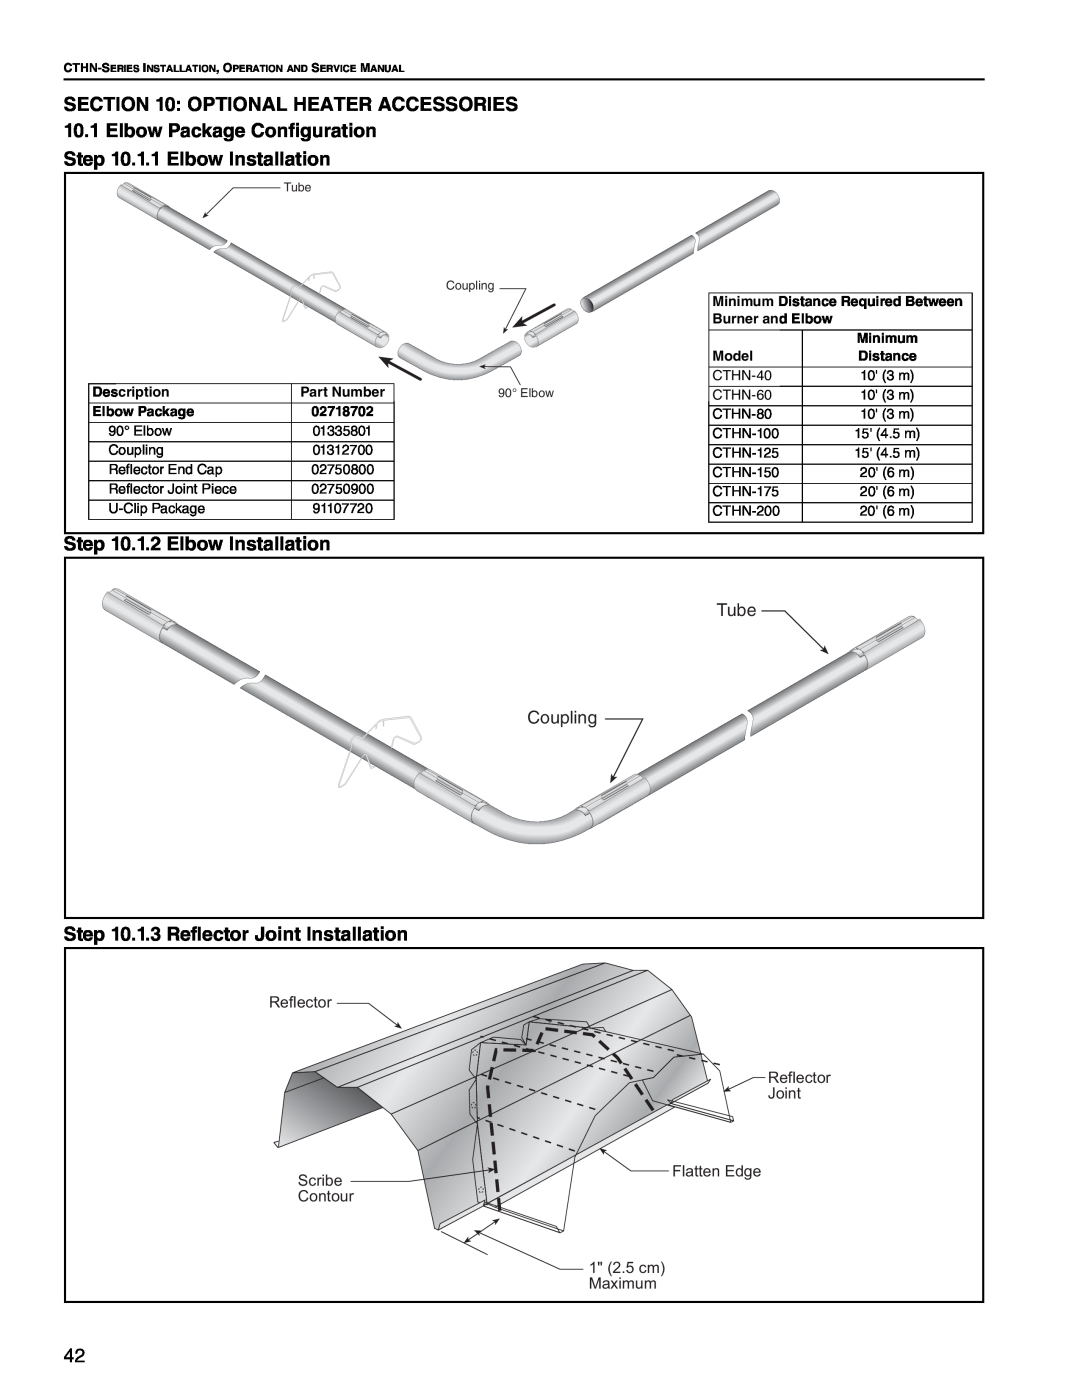 Roberts Gorden CTHN-200 Optional Heater Accessories, 1.2 Elbow Installation, 1.3 Reflector Joint Installation, Description 